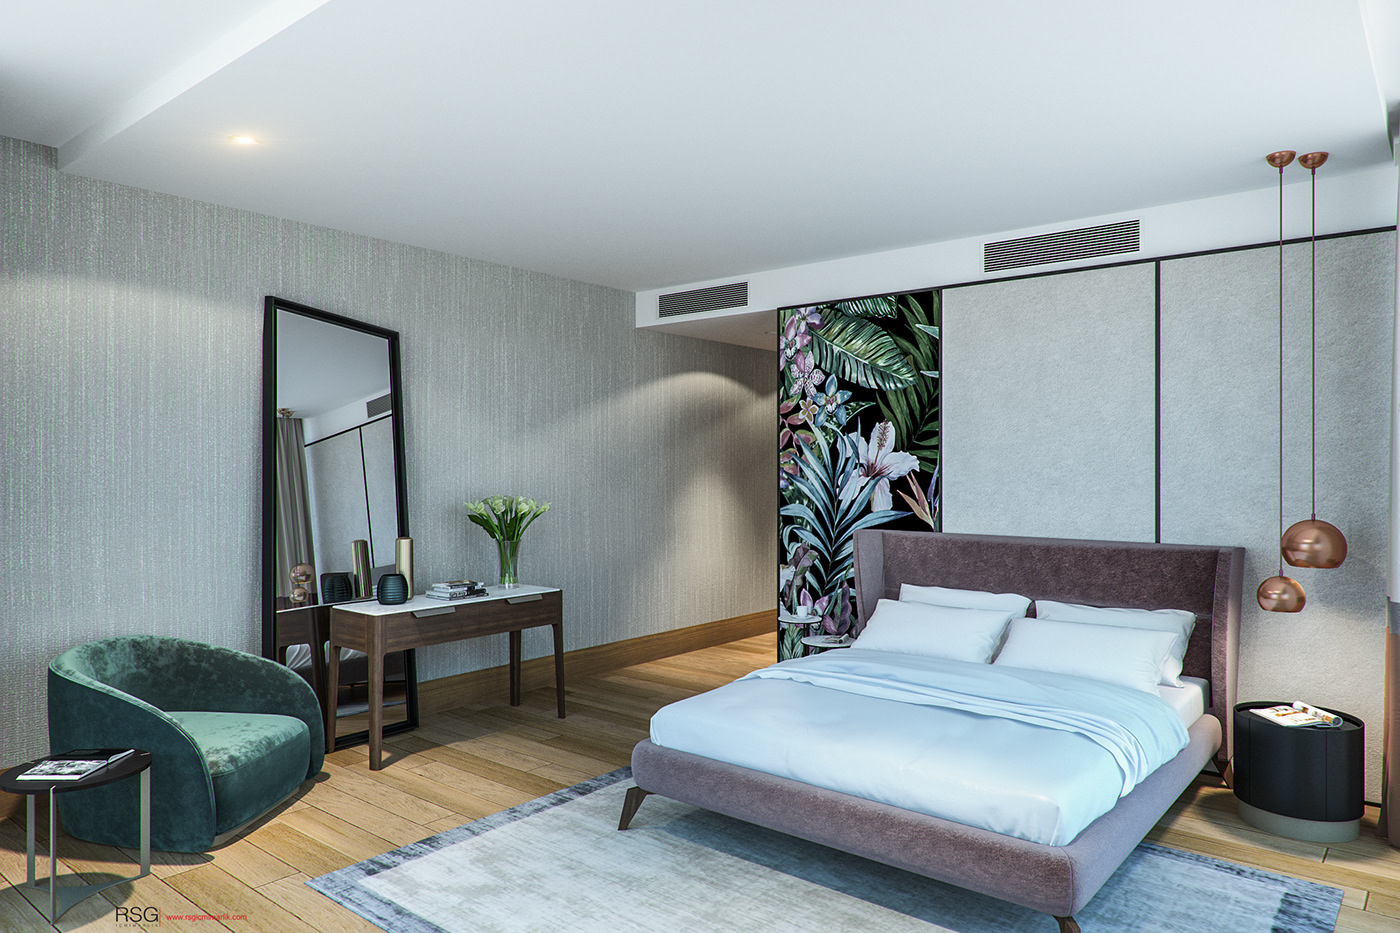 #bedroom #3dsmax #vray #interior #photoshop #Design #cgi #villa 